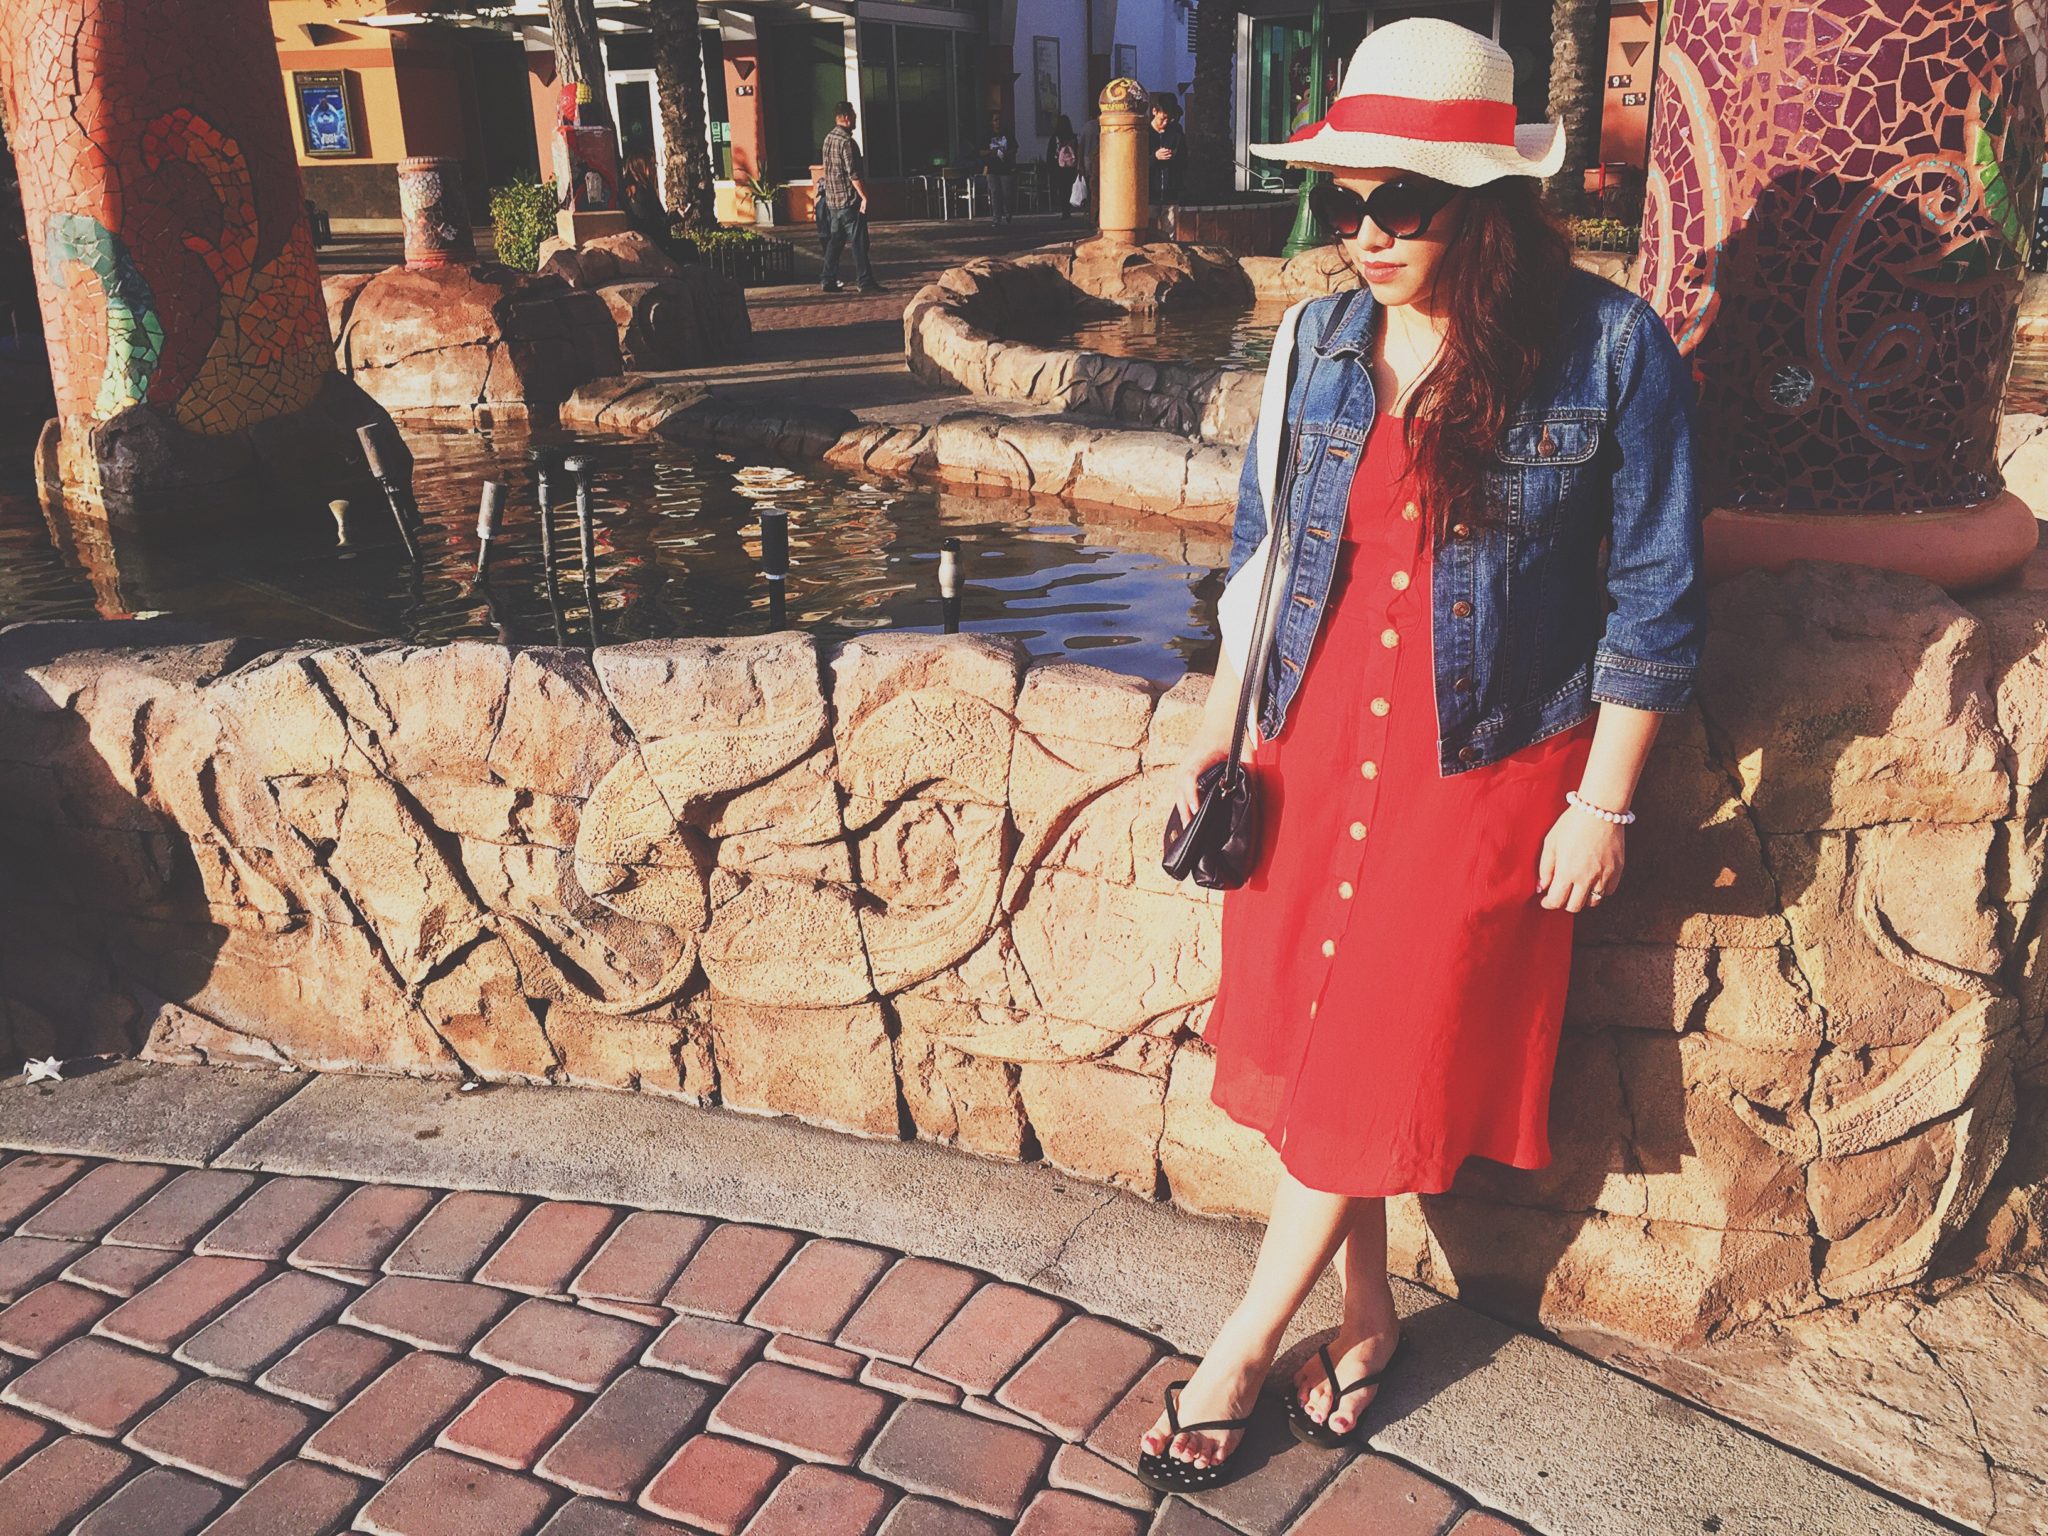  Instagram: @pslilyboutique, Pinterest, Los Angeles fashion blogger, top fashion blog, best fashion blog, fashion & personal style blog, travel blog, travel blogger, LA fashion blogger, 5.2.18, spring 2018 outfit ideas, dress, shoes, hat, jacket, sunglasses, bag